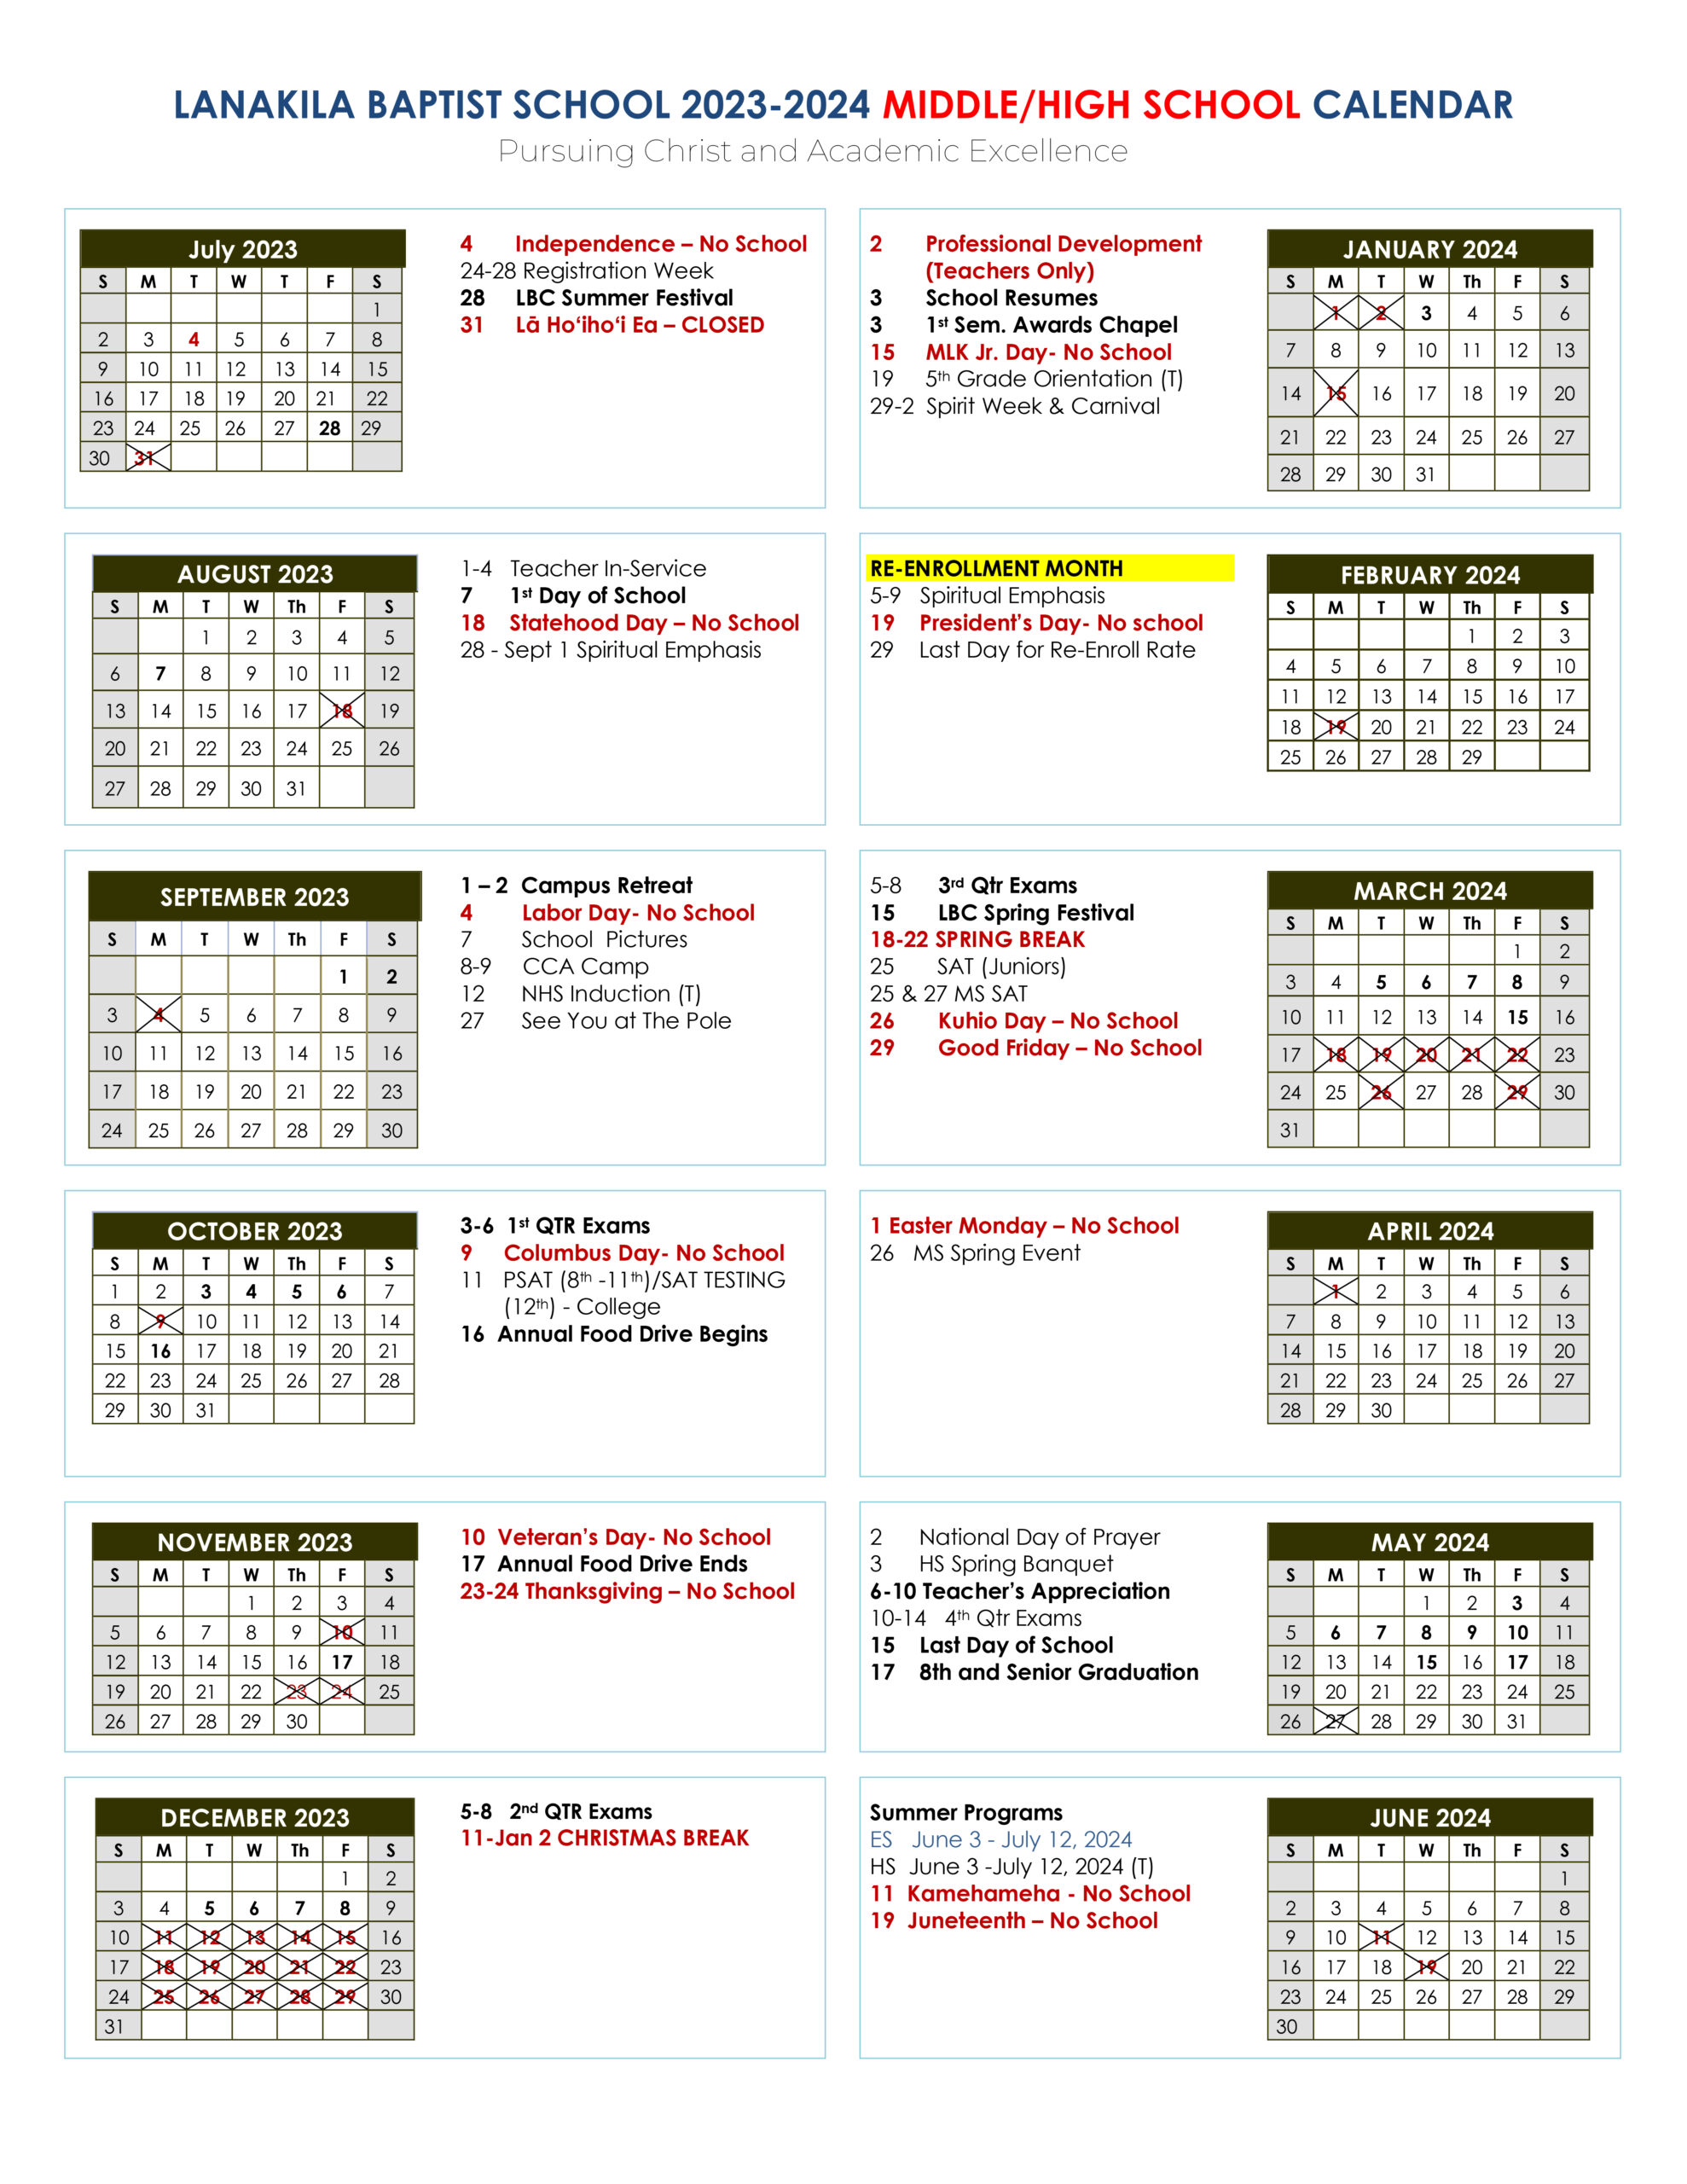 School Calendar | Lanakila Baptist Schools